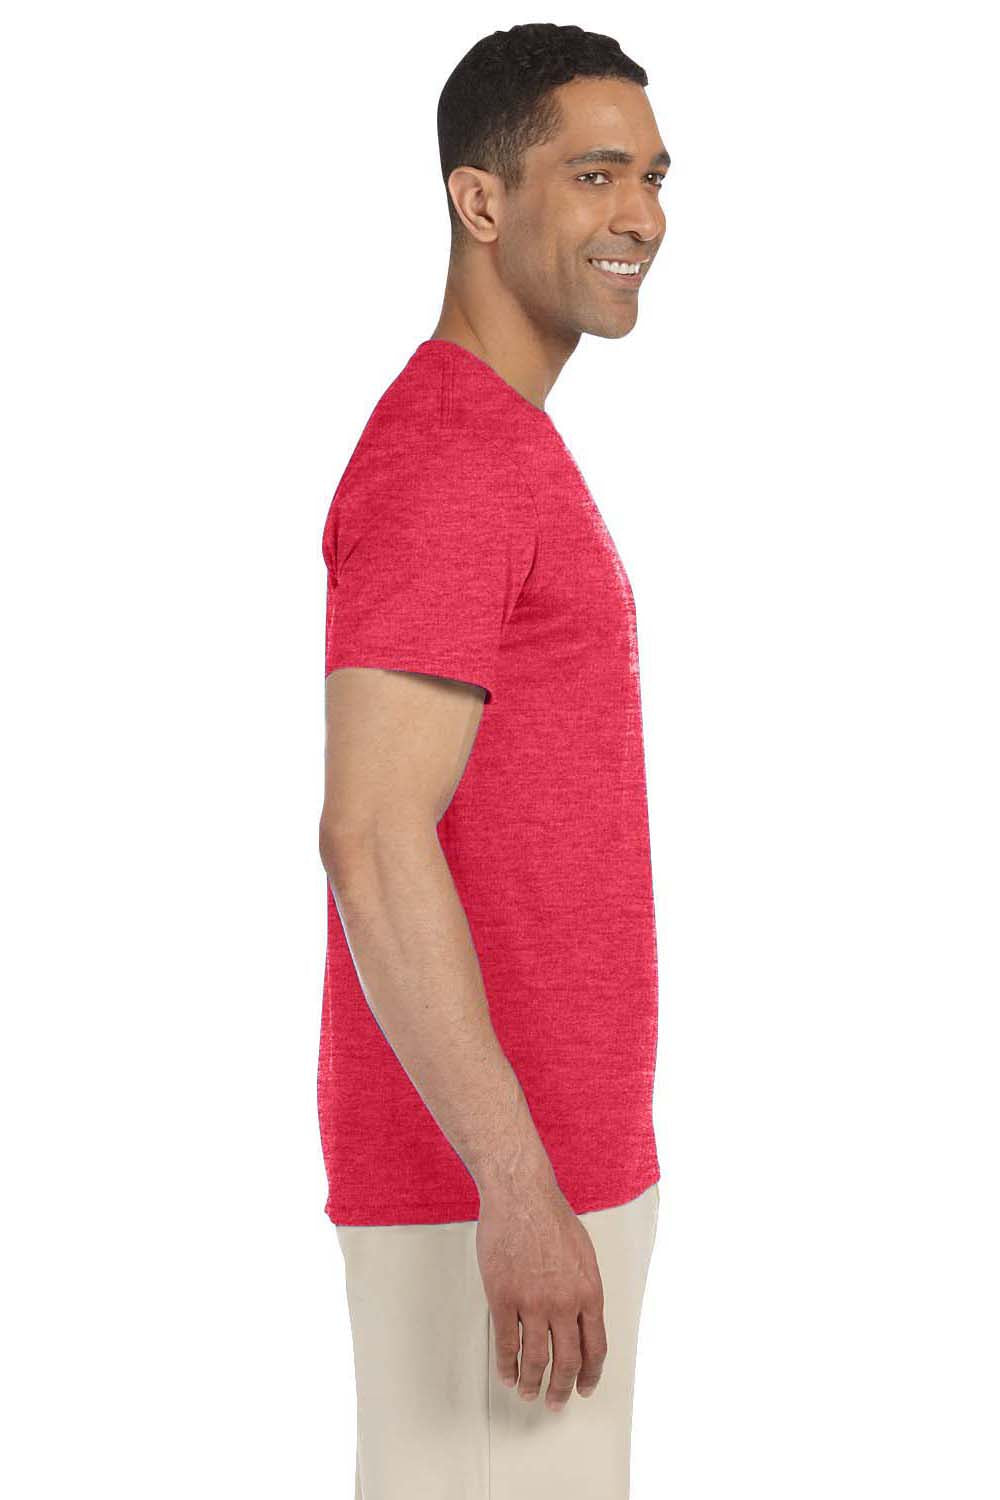 Gildan G640 Mens Softstyle Short Sleeve Crewneck T-Shirt Heather Red Side